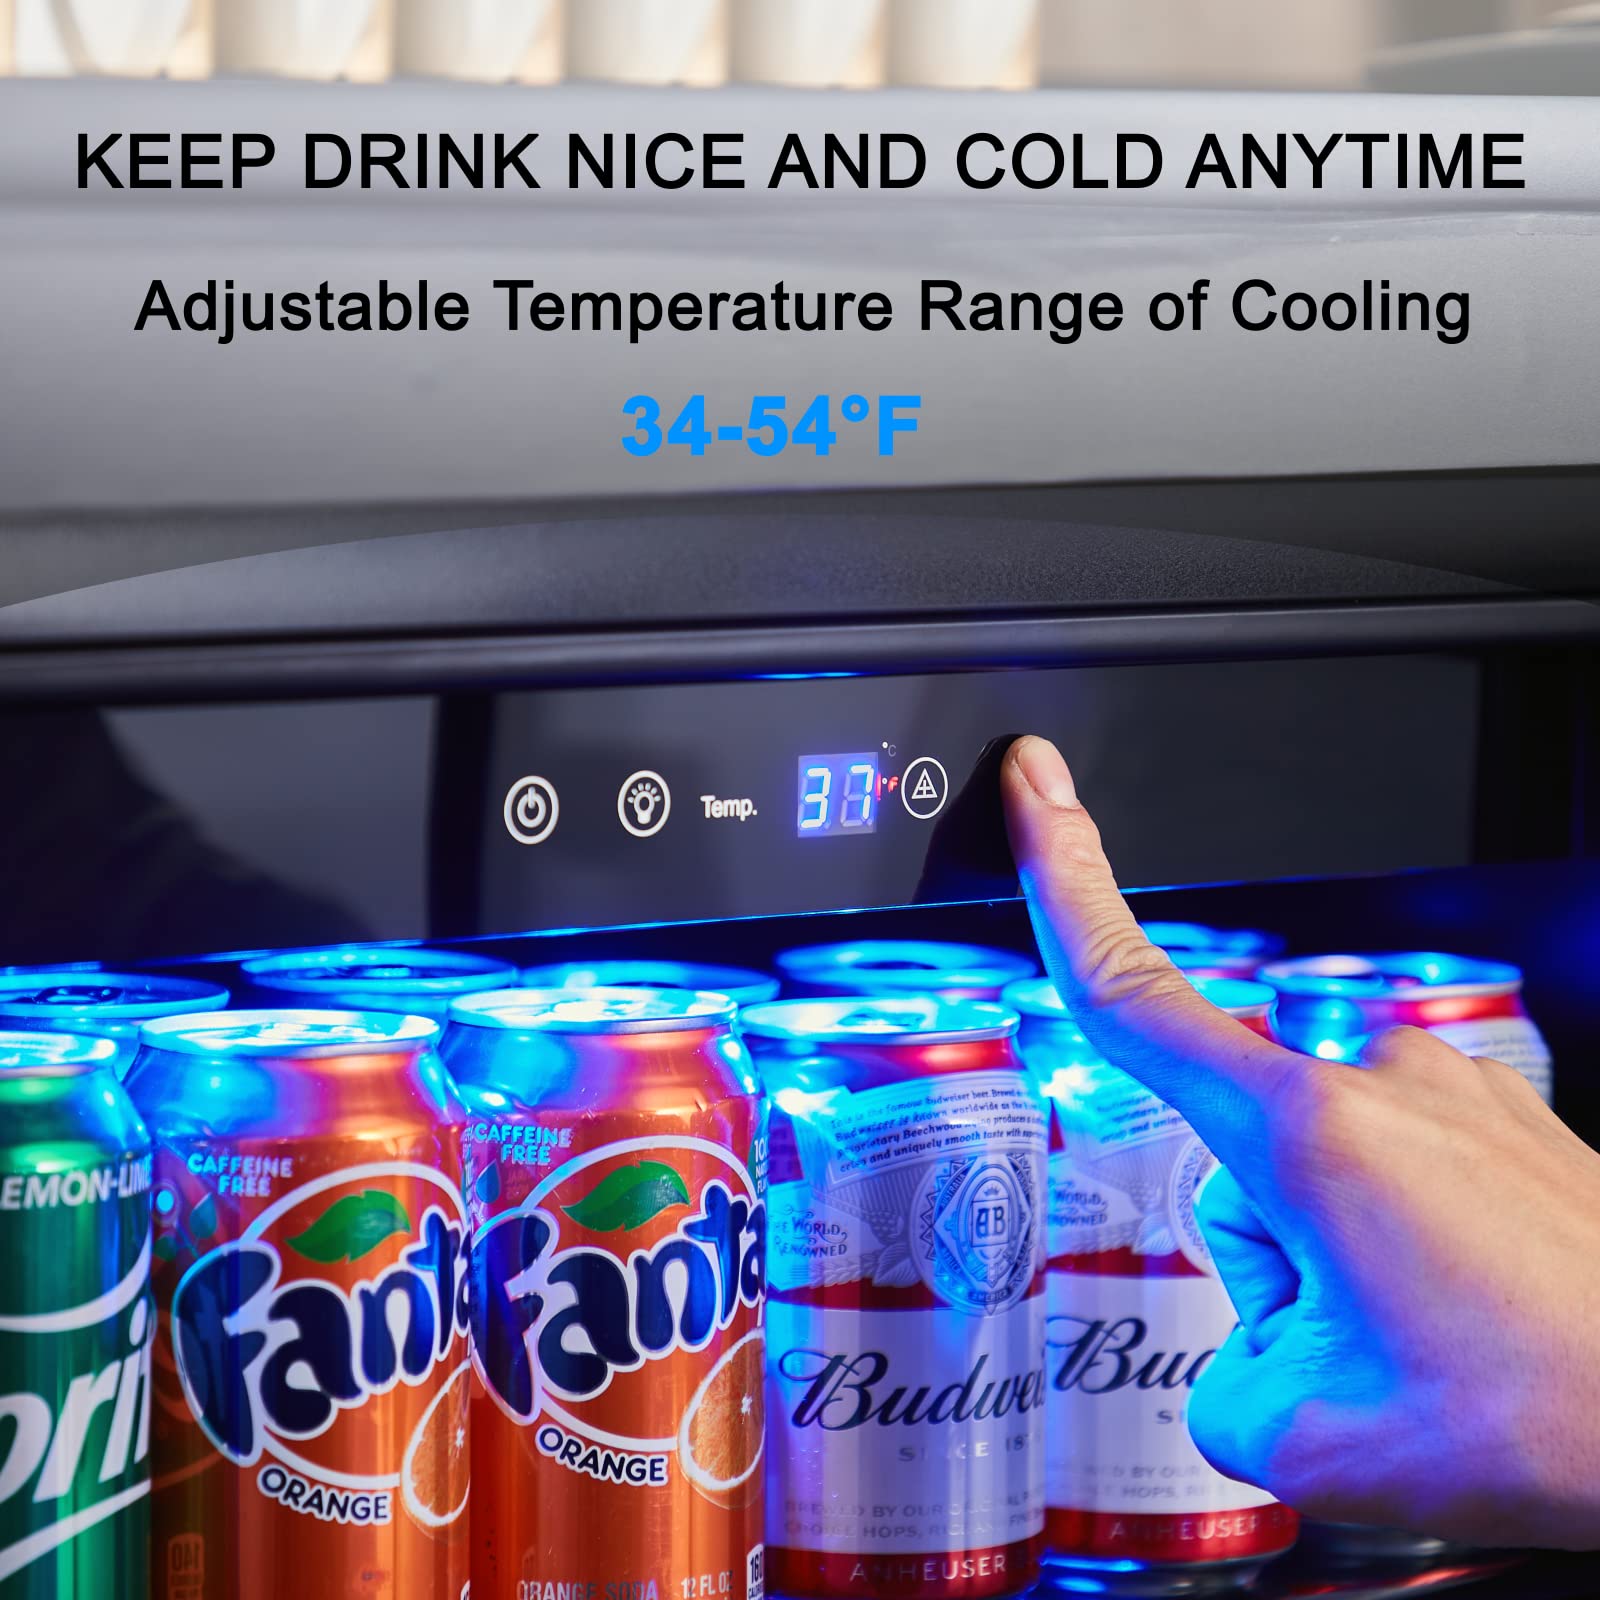 Yeego 24 Inch Beverage Refrigerator, 180can Beer Fridge Removeable Racks emperature 37-65°F, Beverage Cooler Built in Counter or Freestanding, with Glass Door, Lock, Quiet Operation